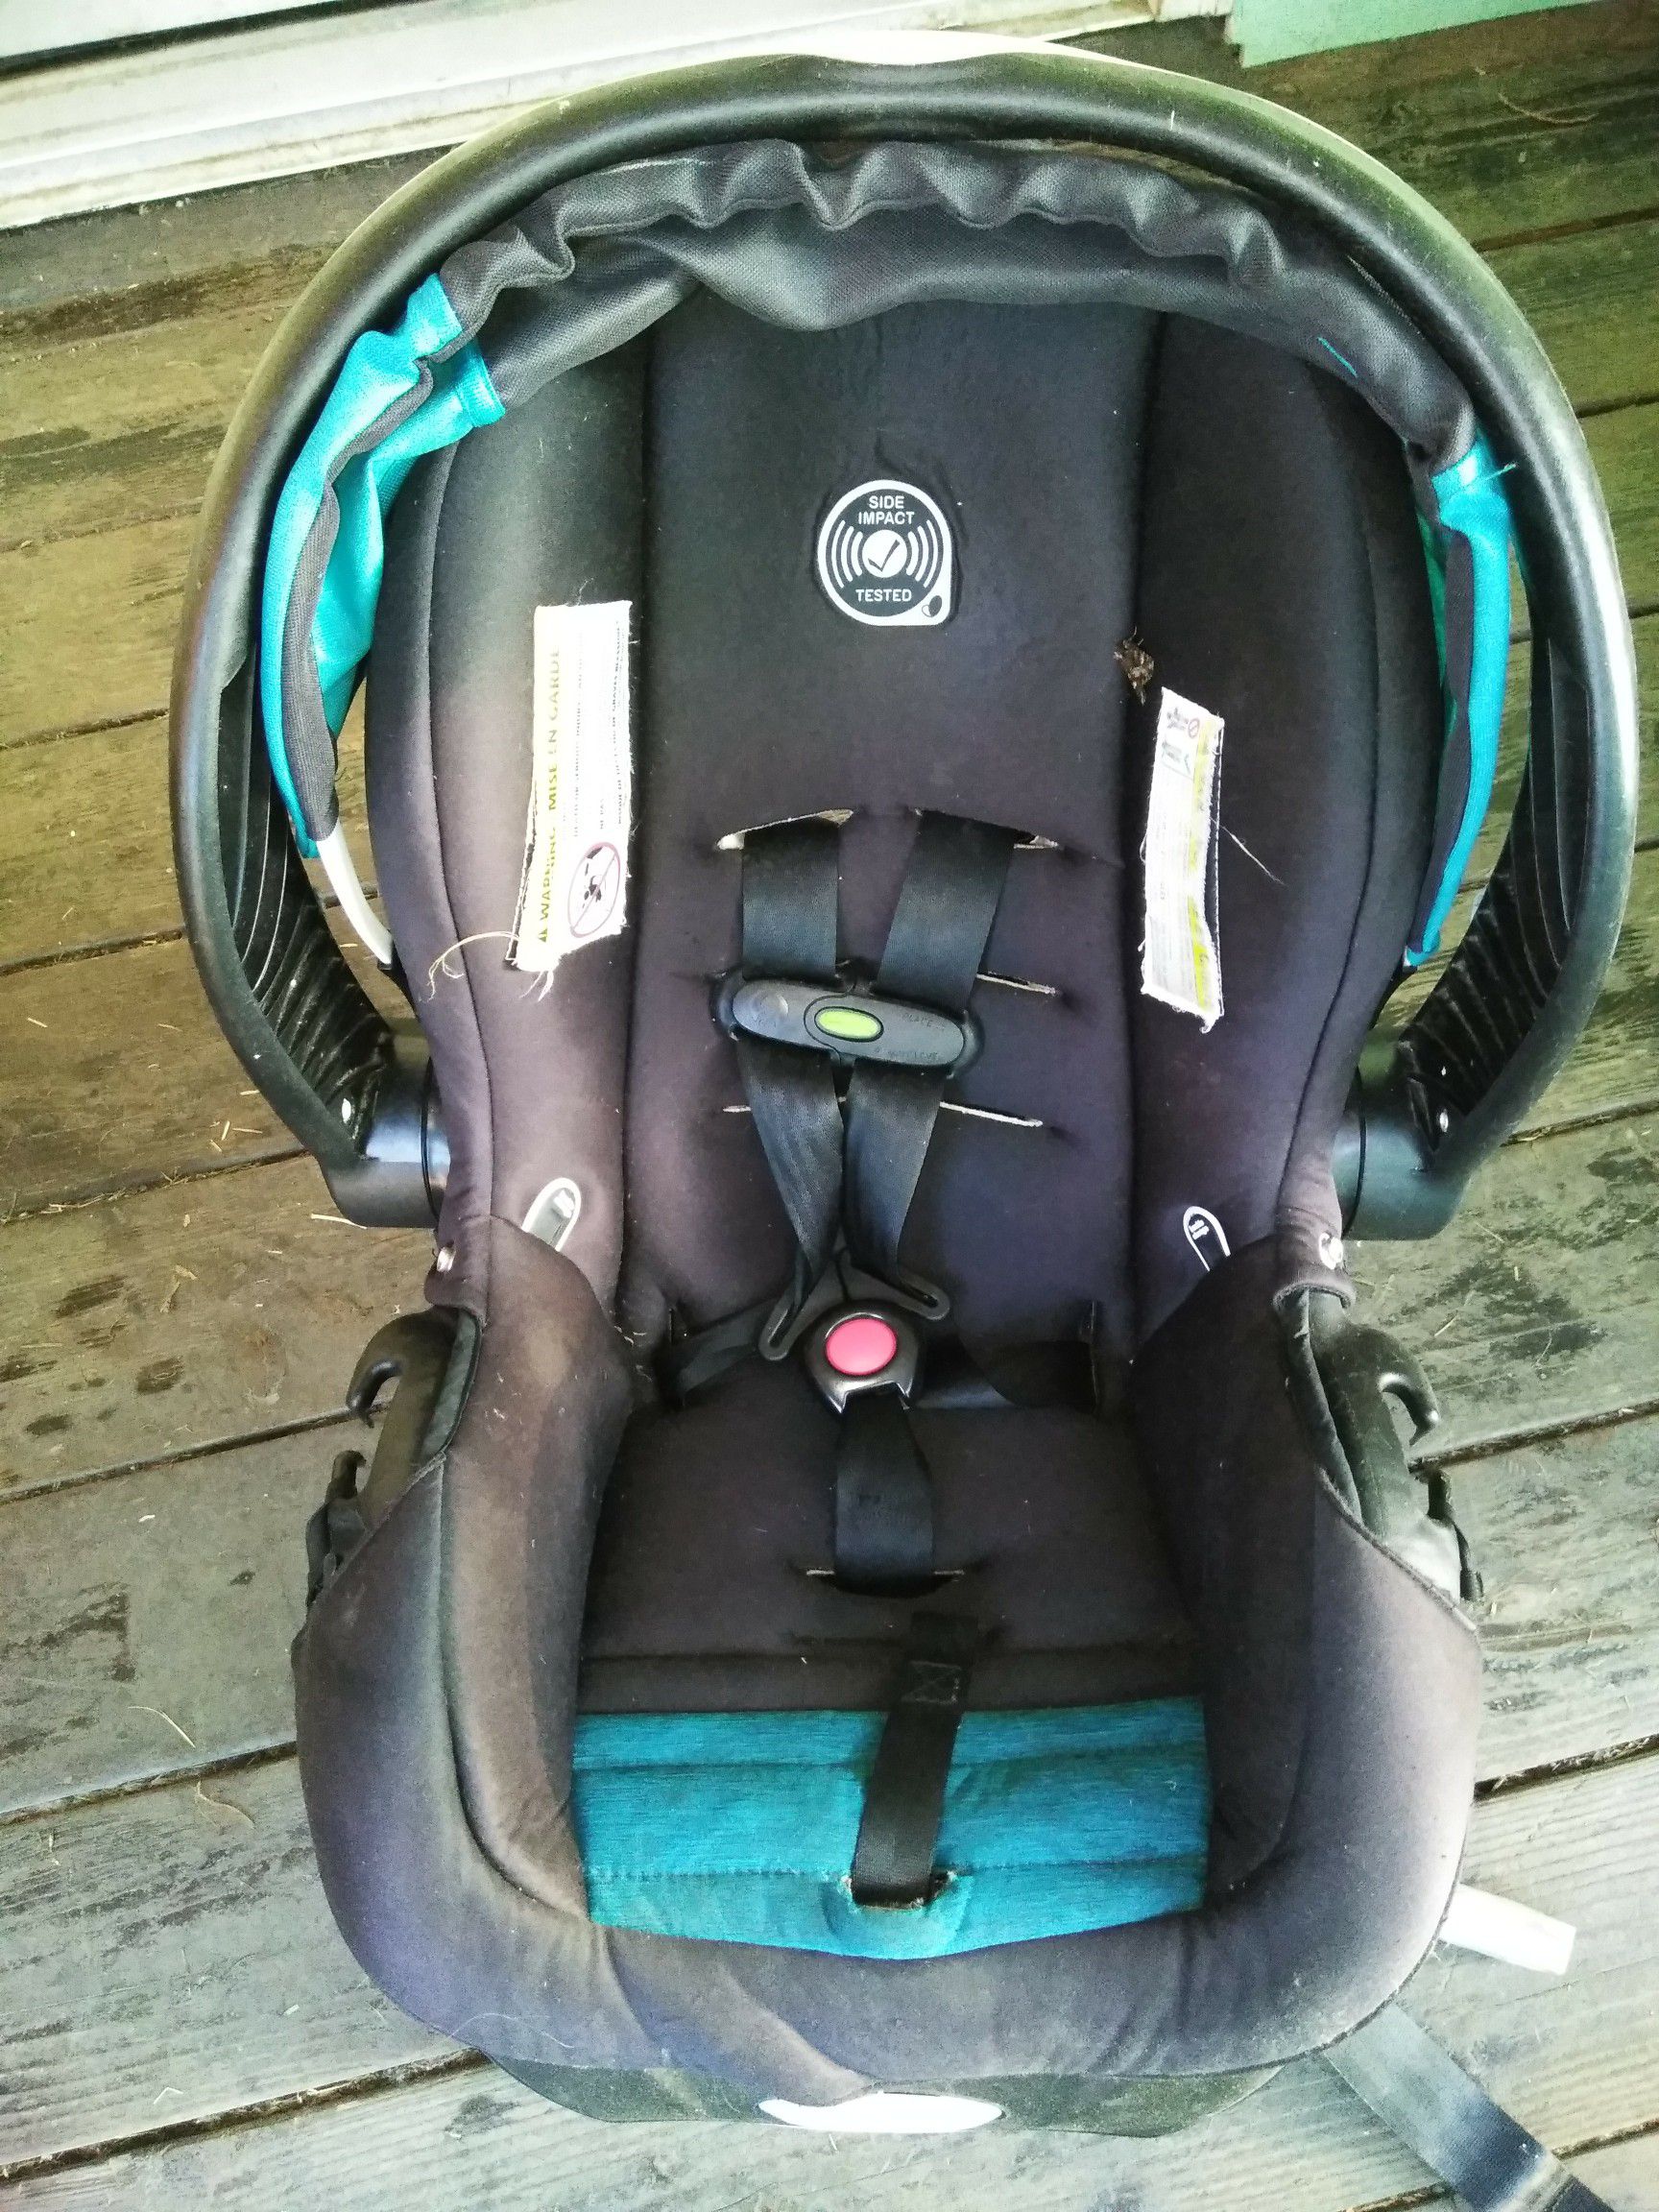 Evenflo infant car seat retail $189 asking $50